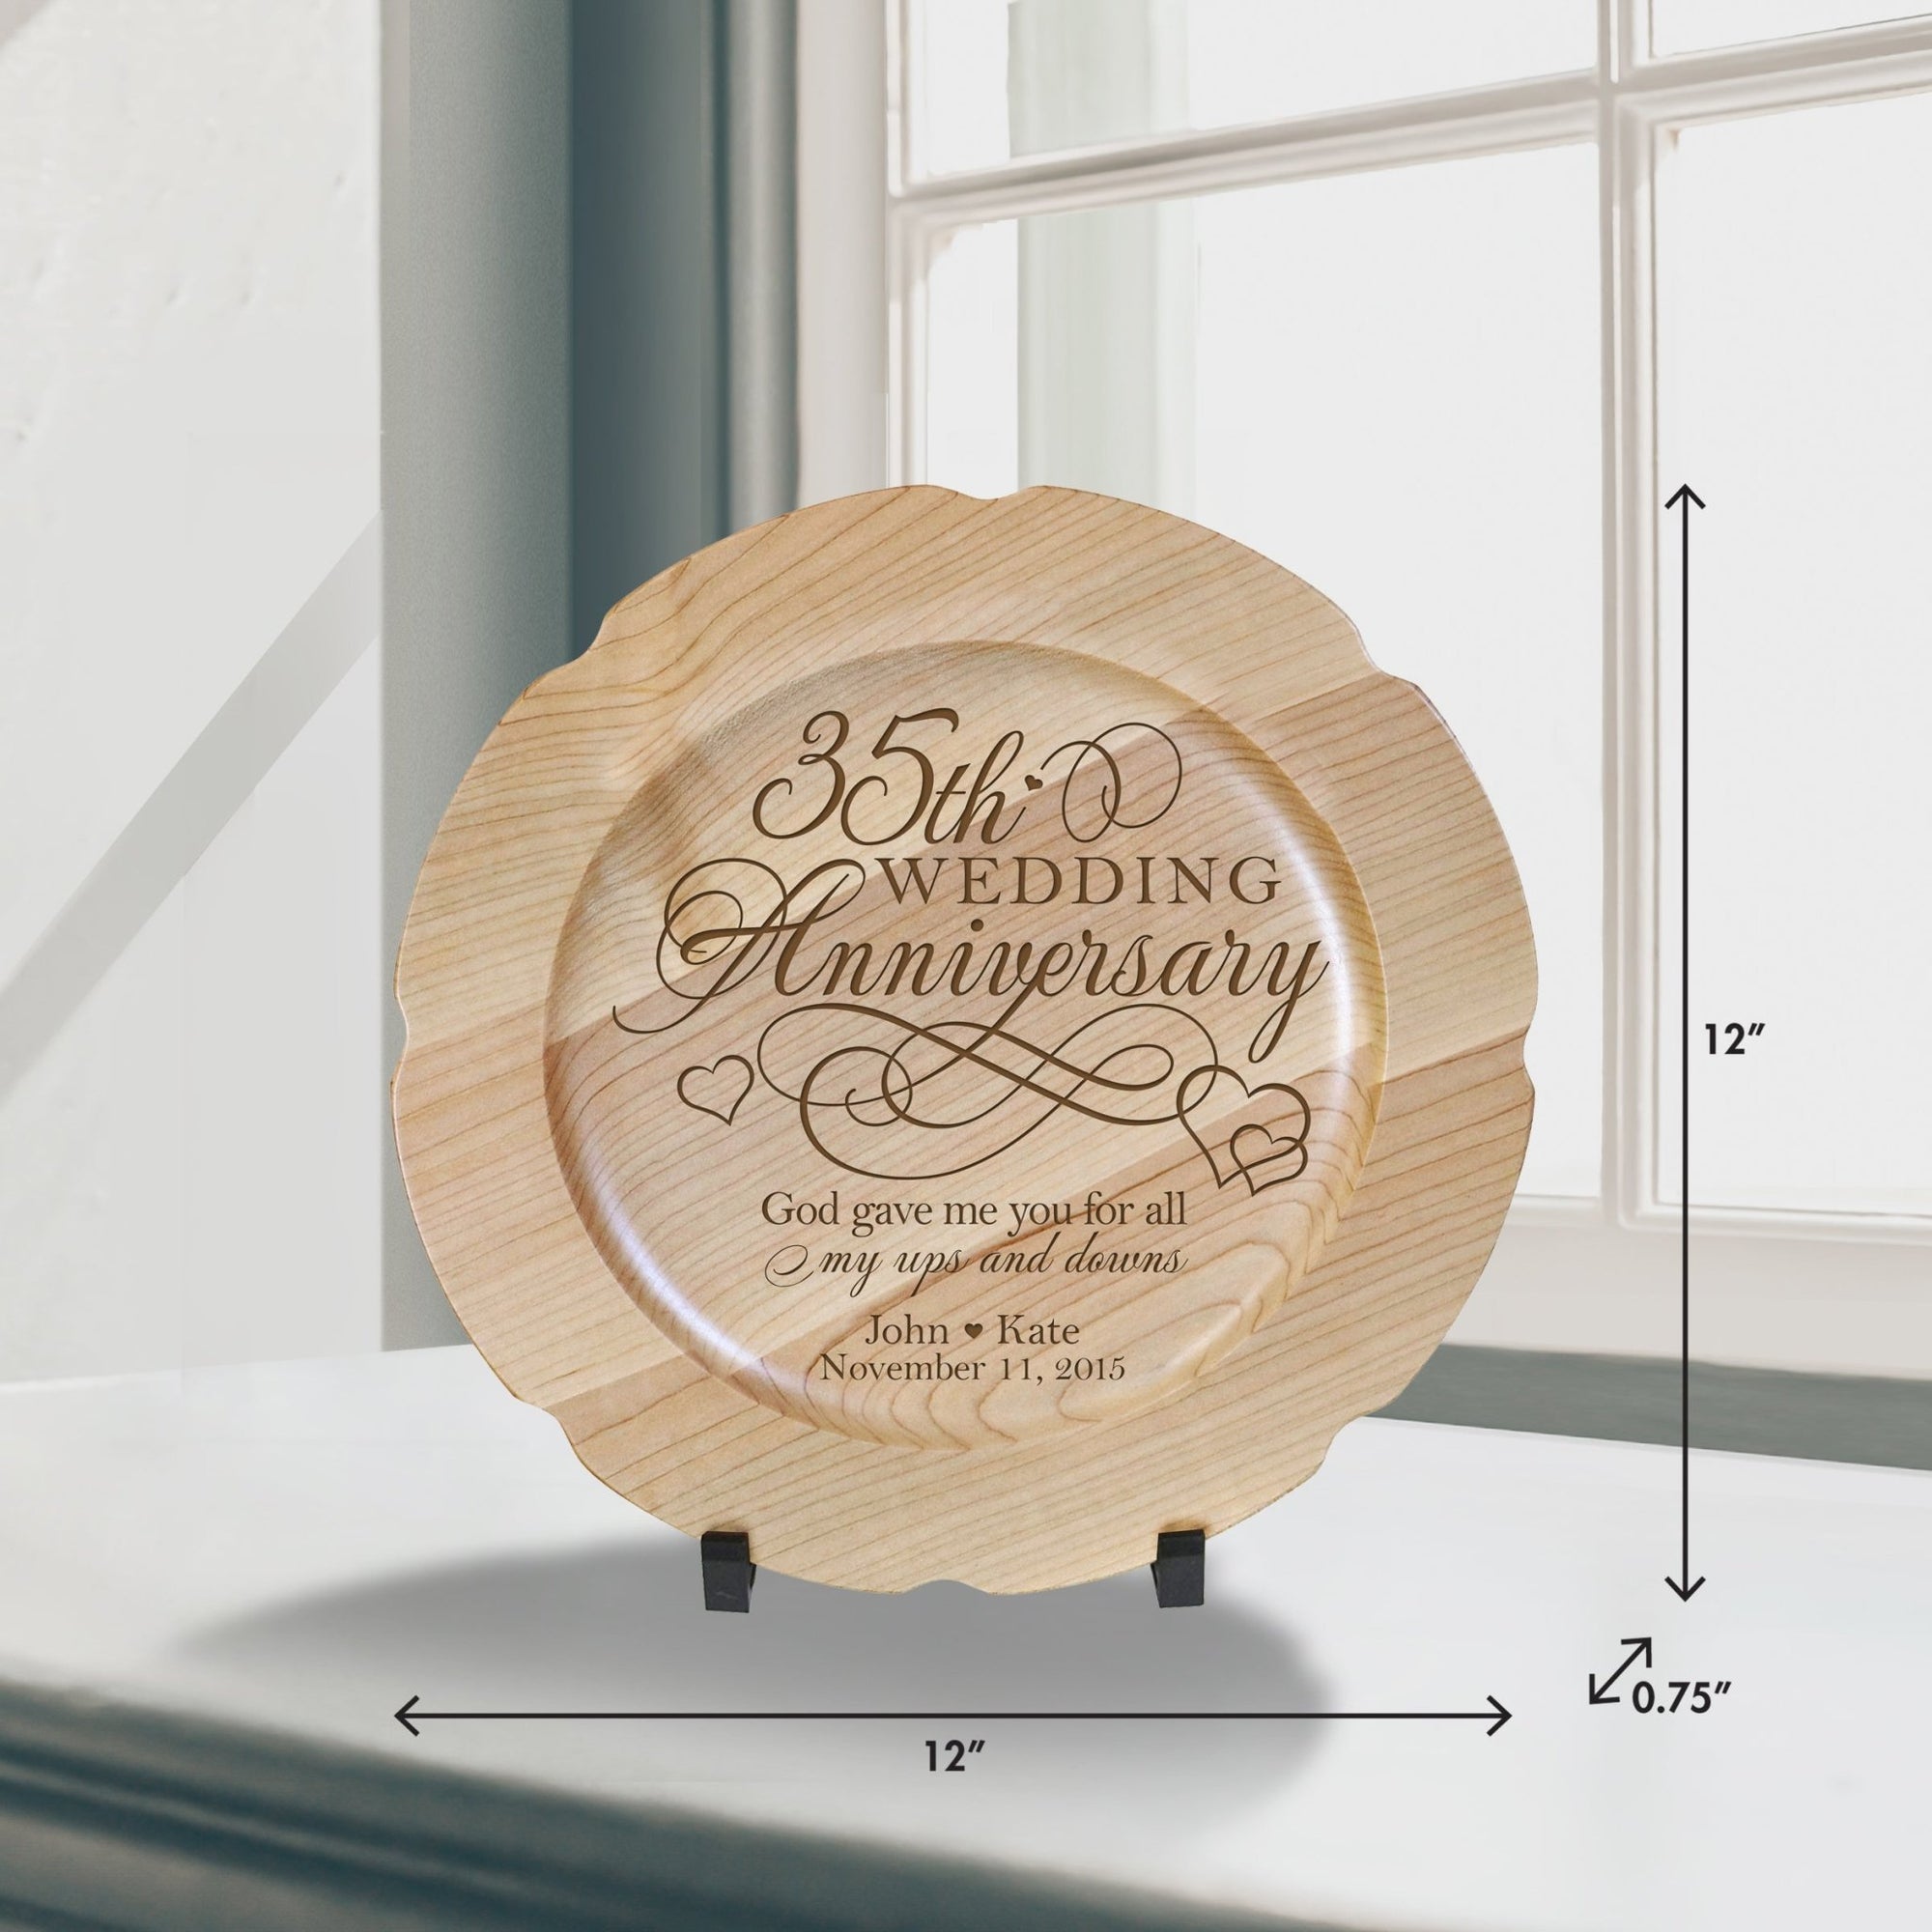 Personalized 35th Wedding Anniversary Decorative Plate - Celebrating - LifeSong Milestones